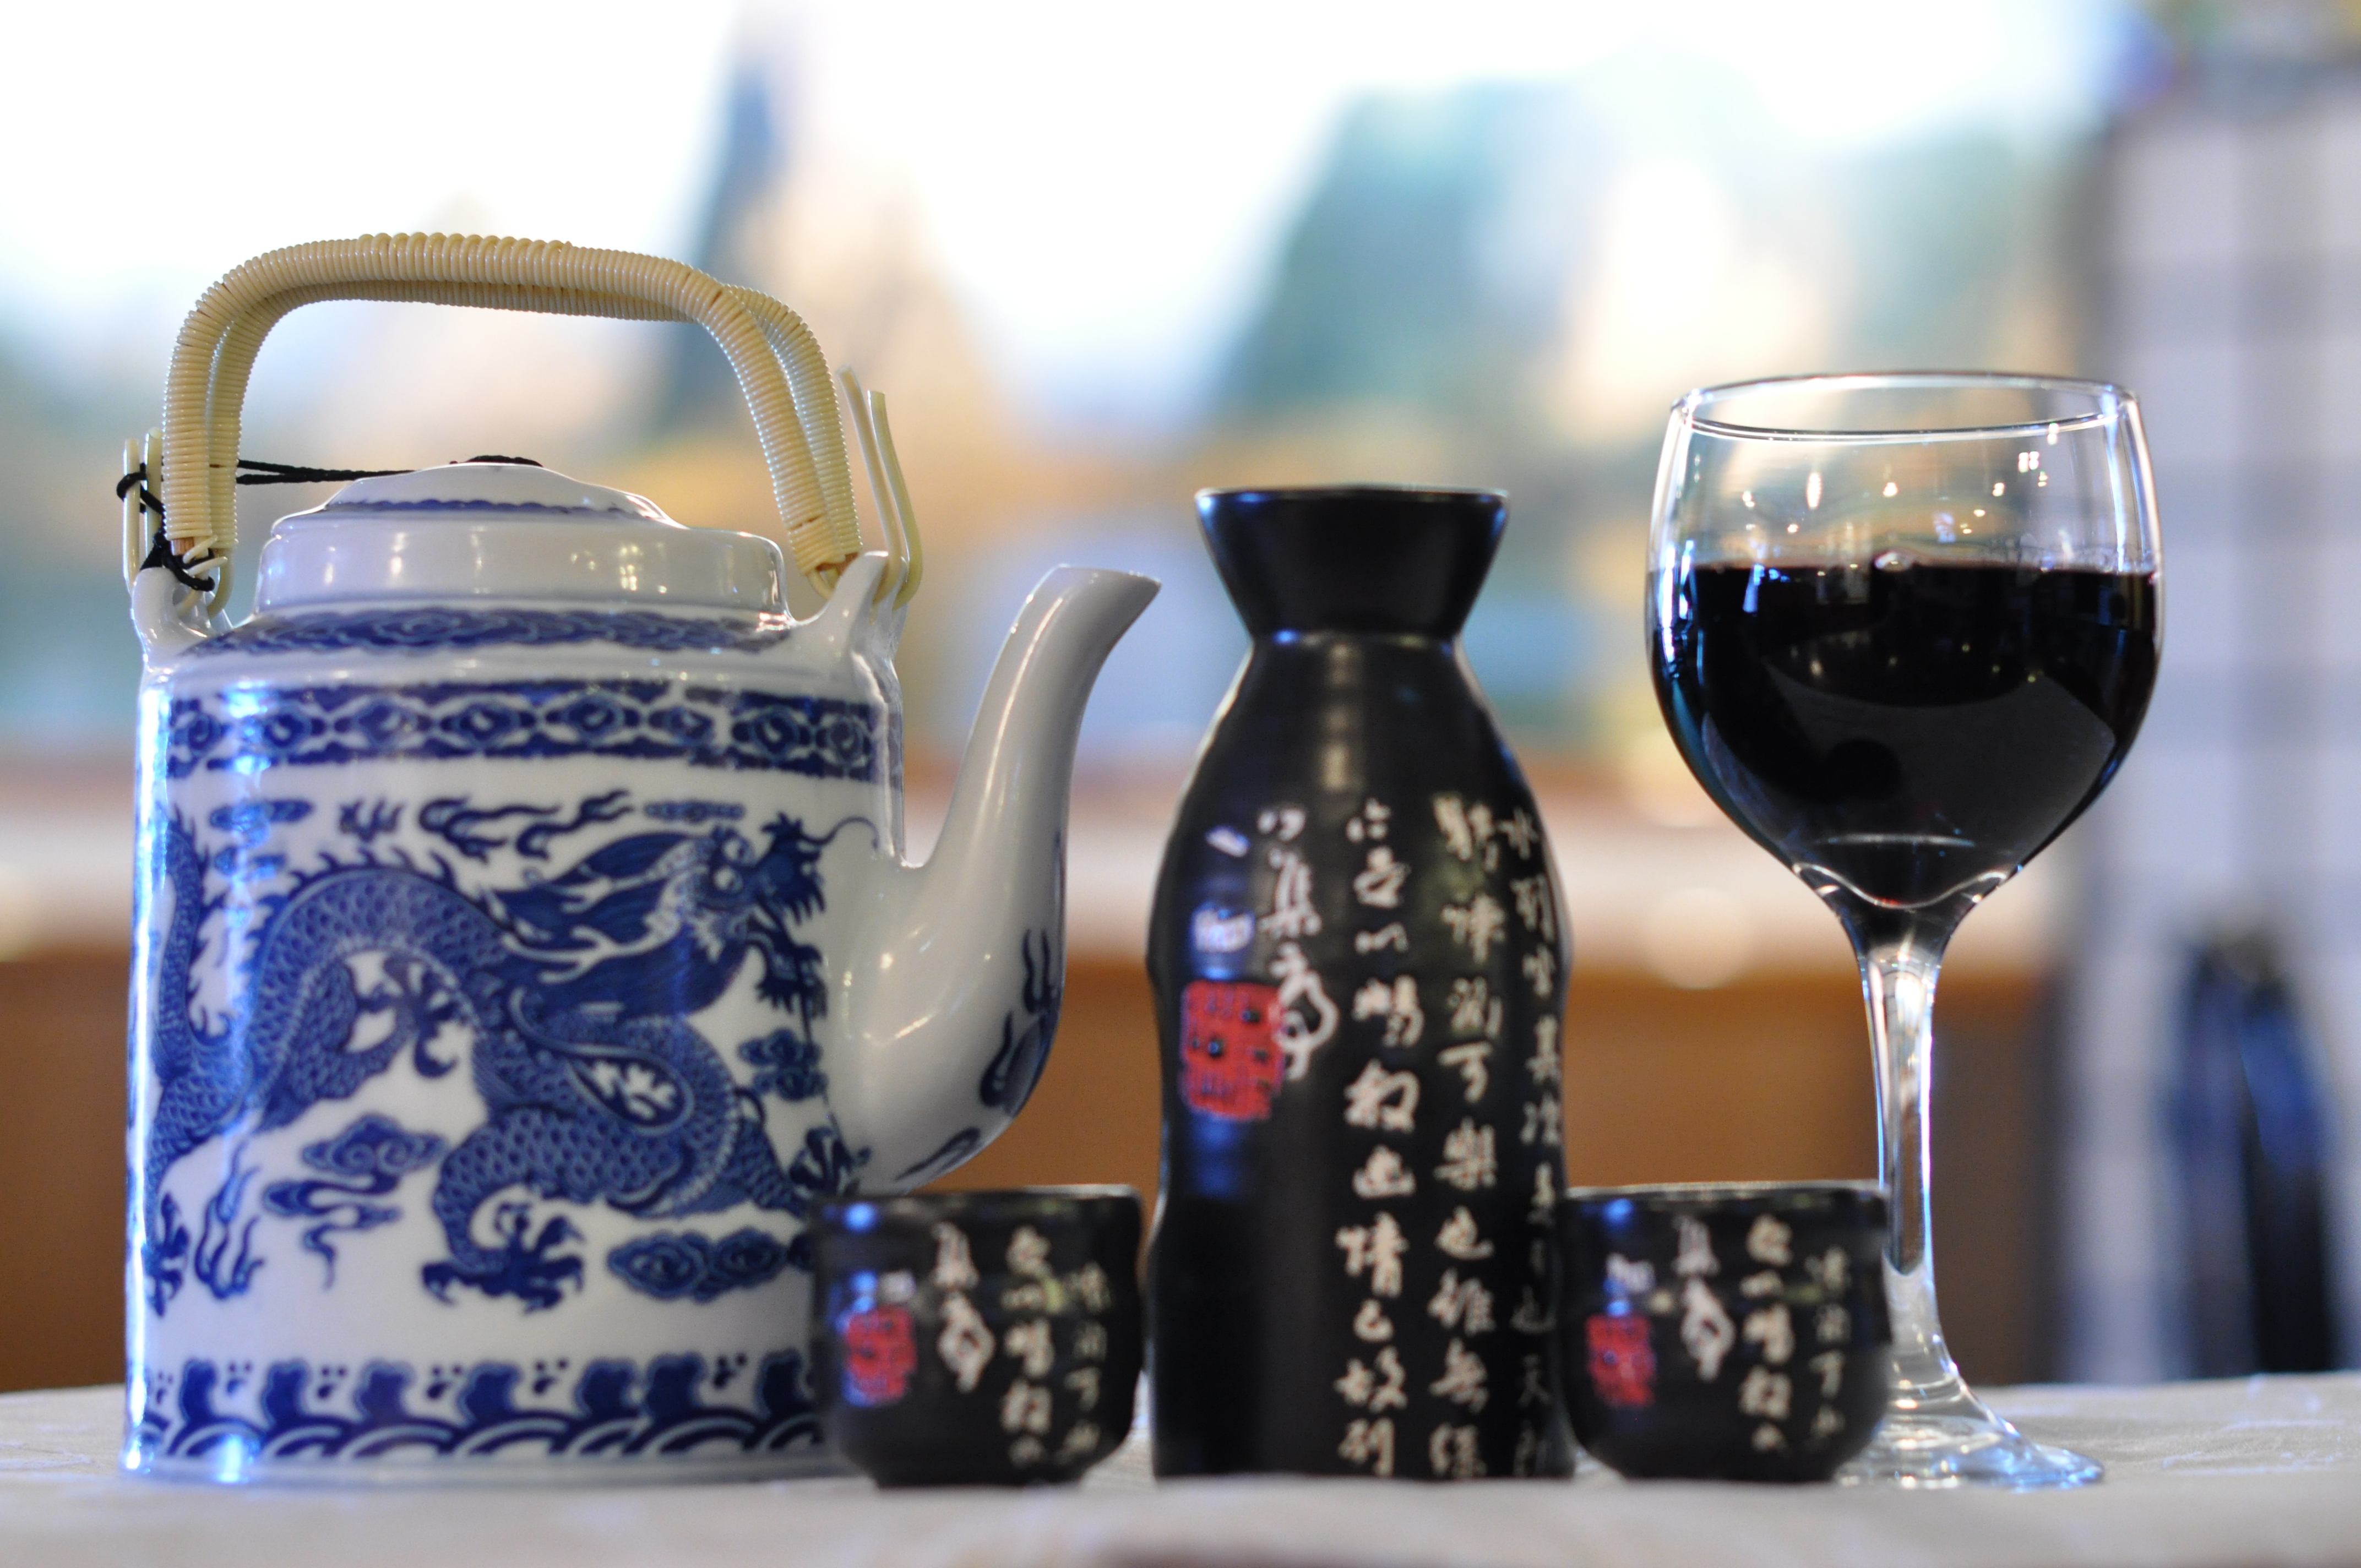 ('sake-and-wine.jpg', 'Sake And Wine')